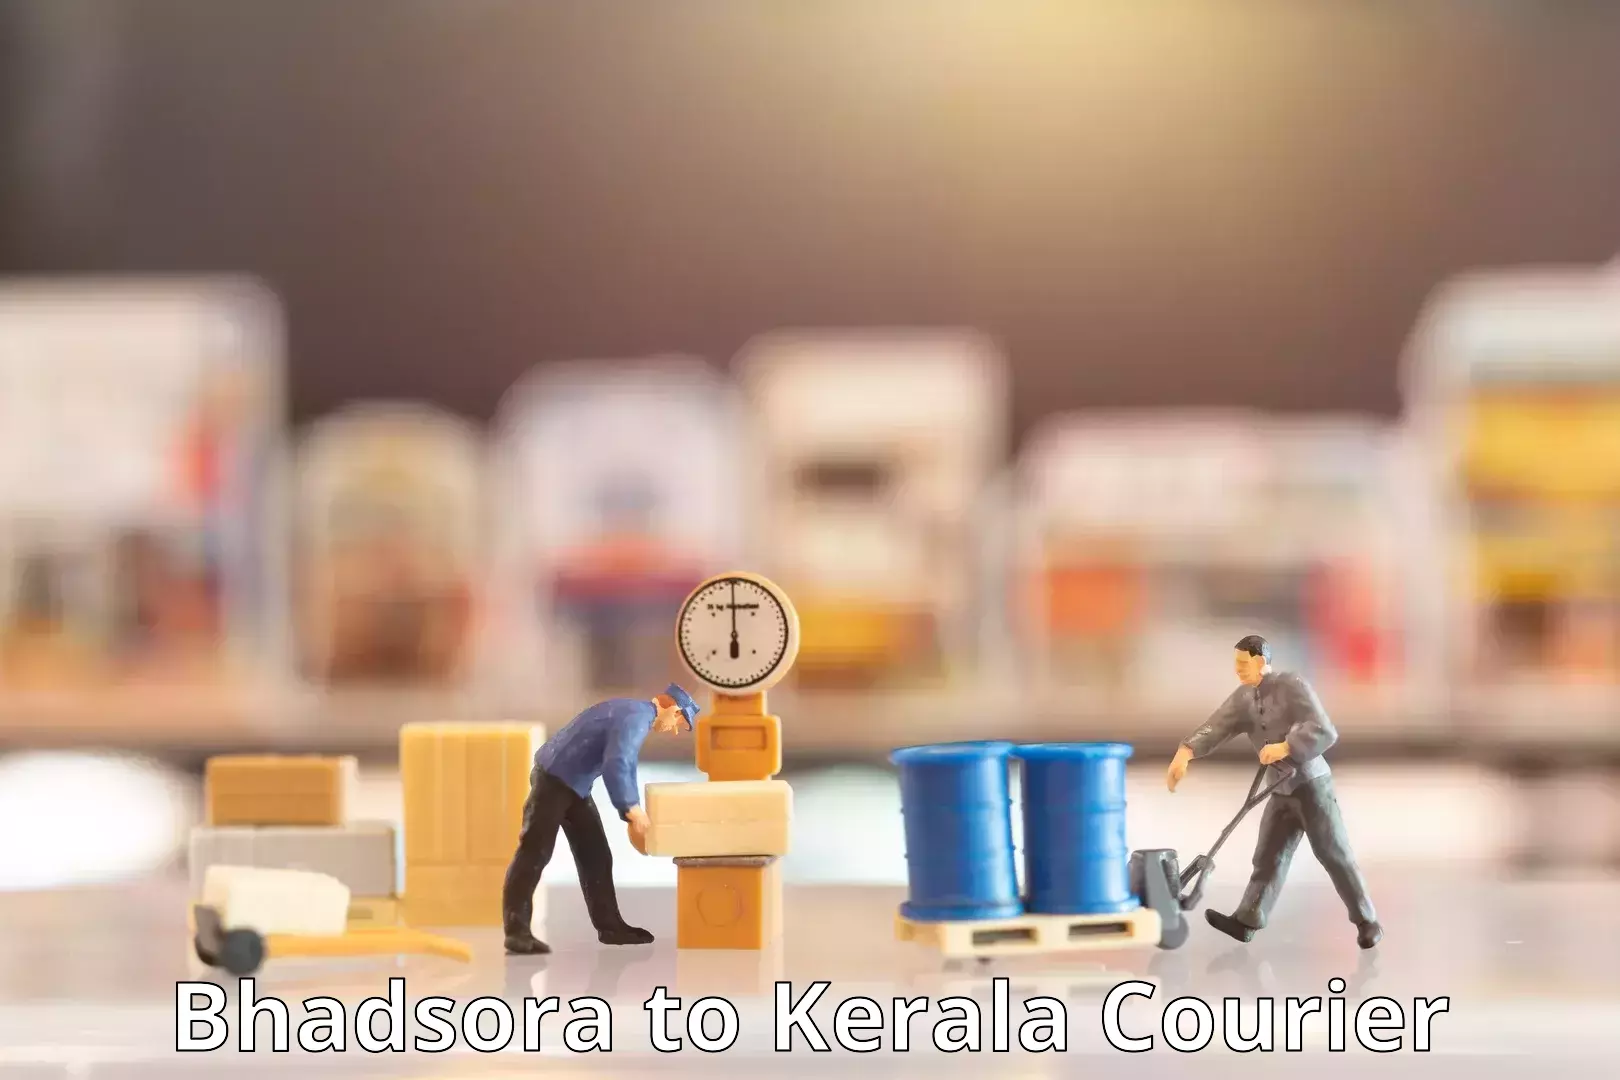 Customer-centric shipping Bhadsora to Kerala